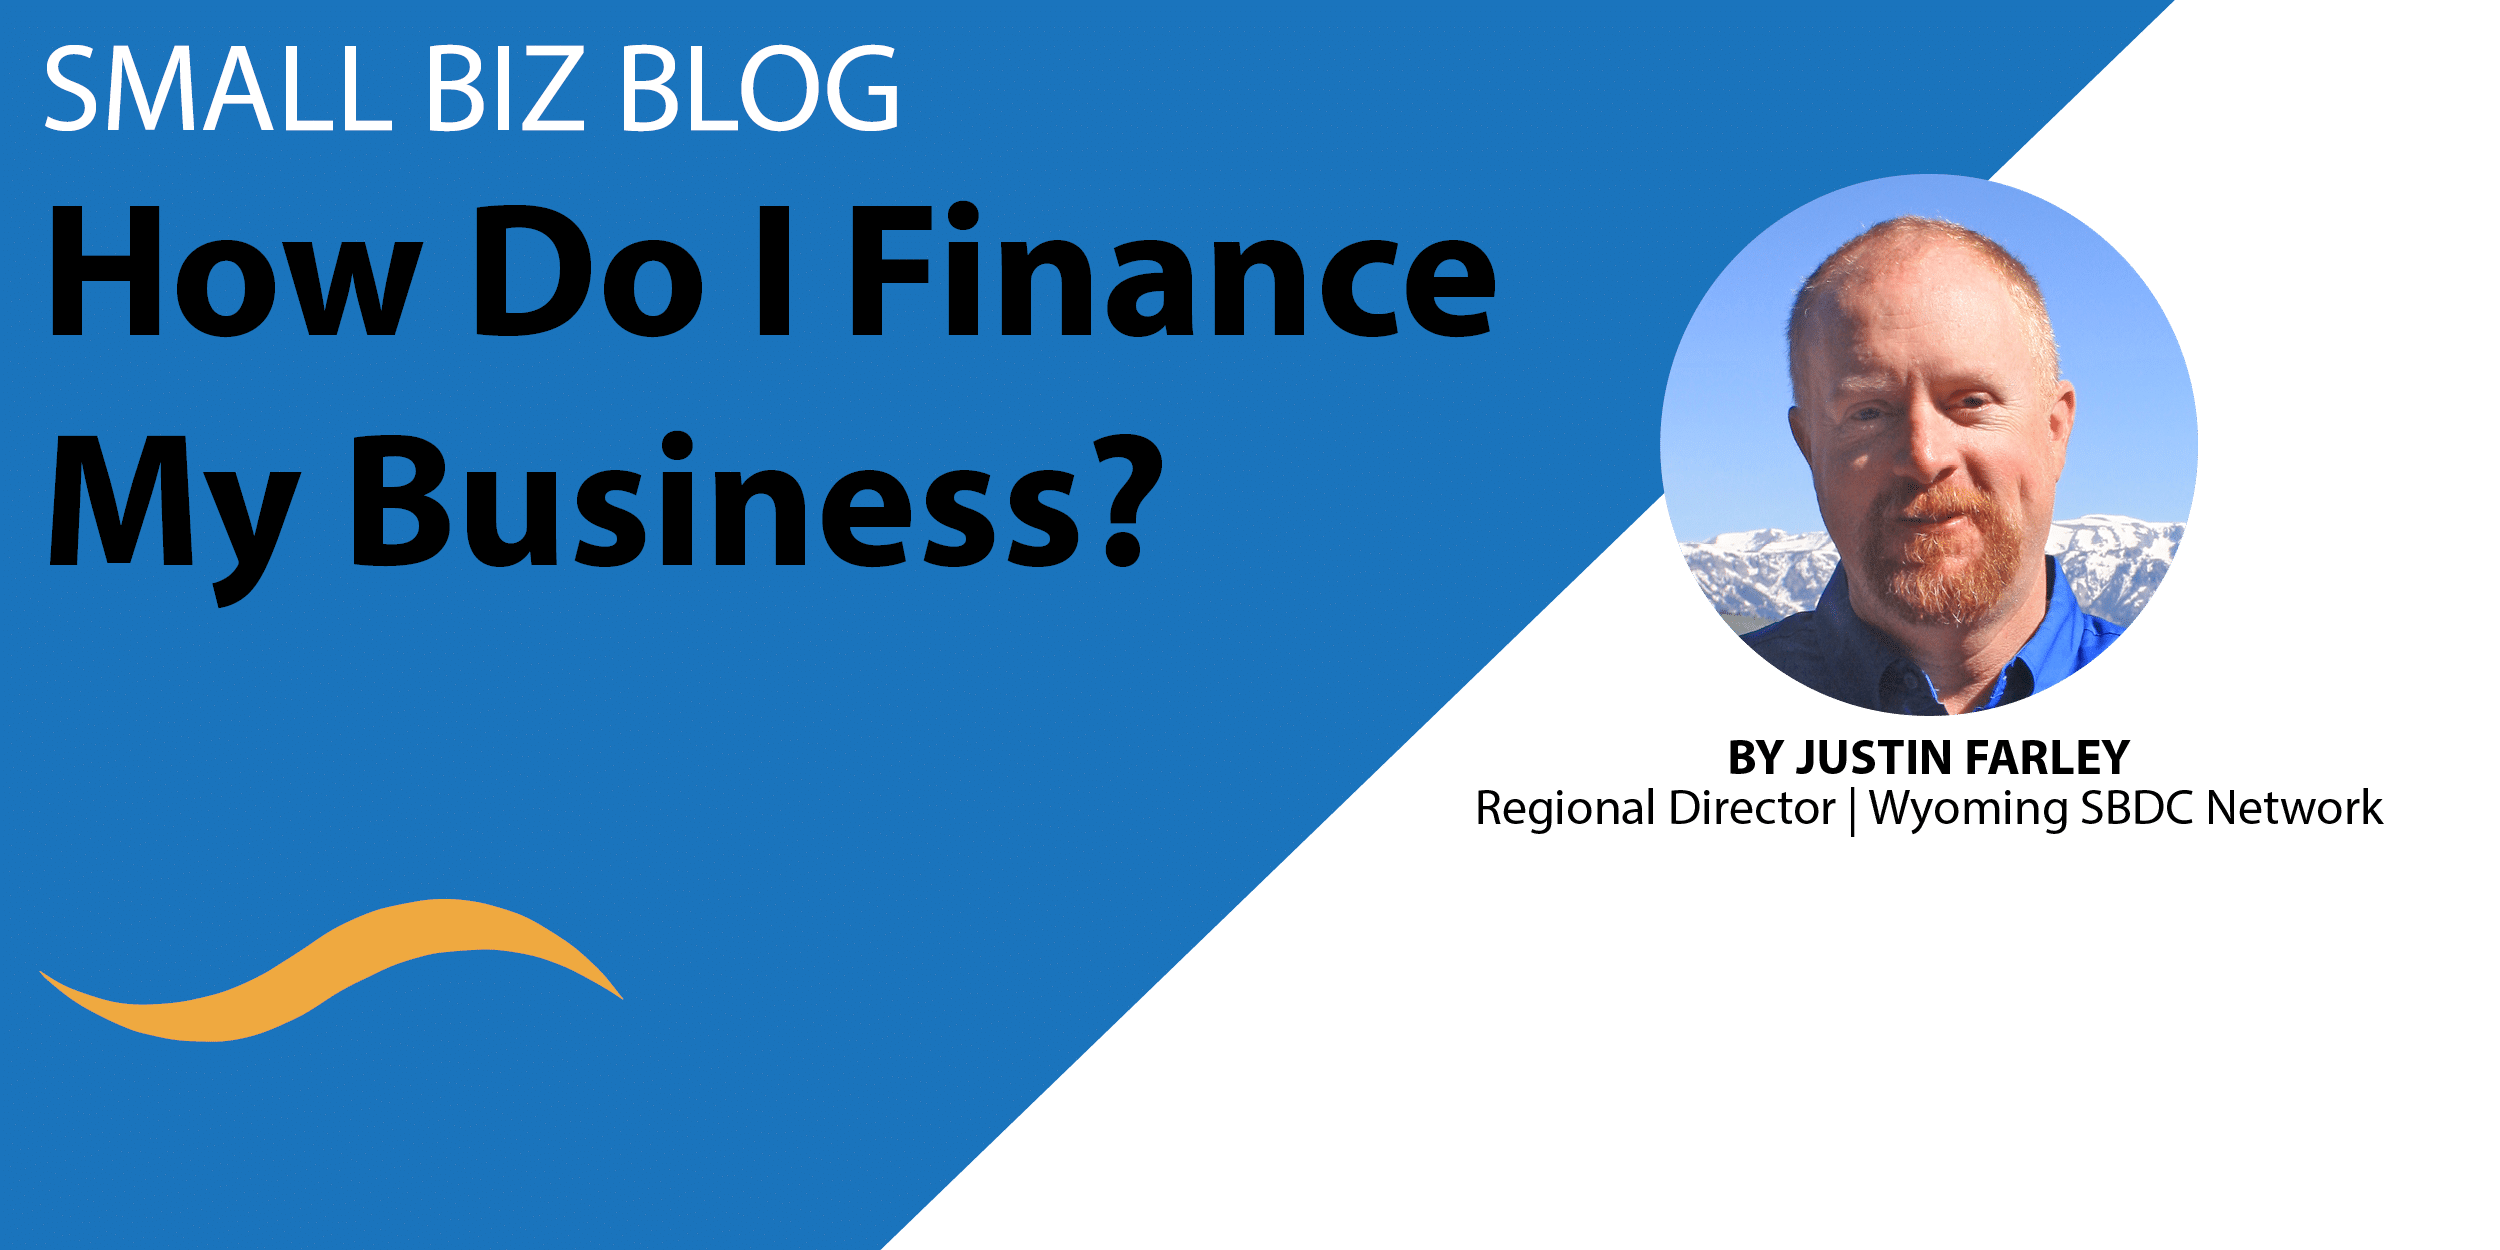 How do I finance my business?